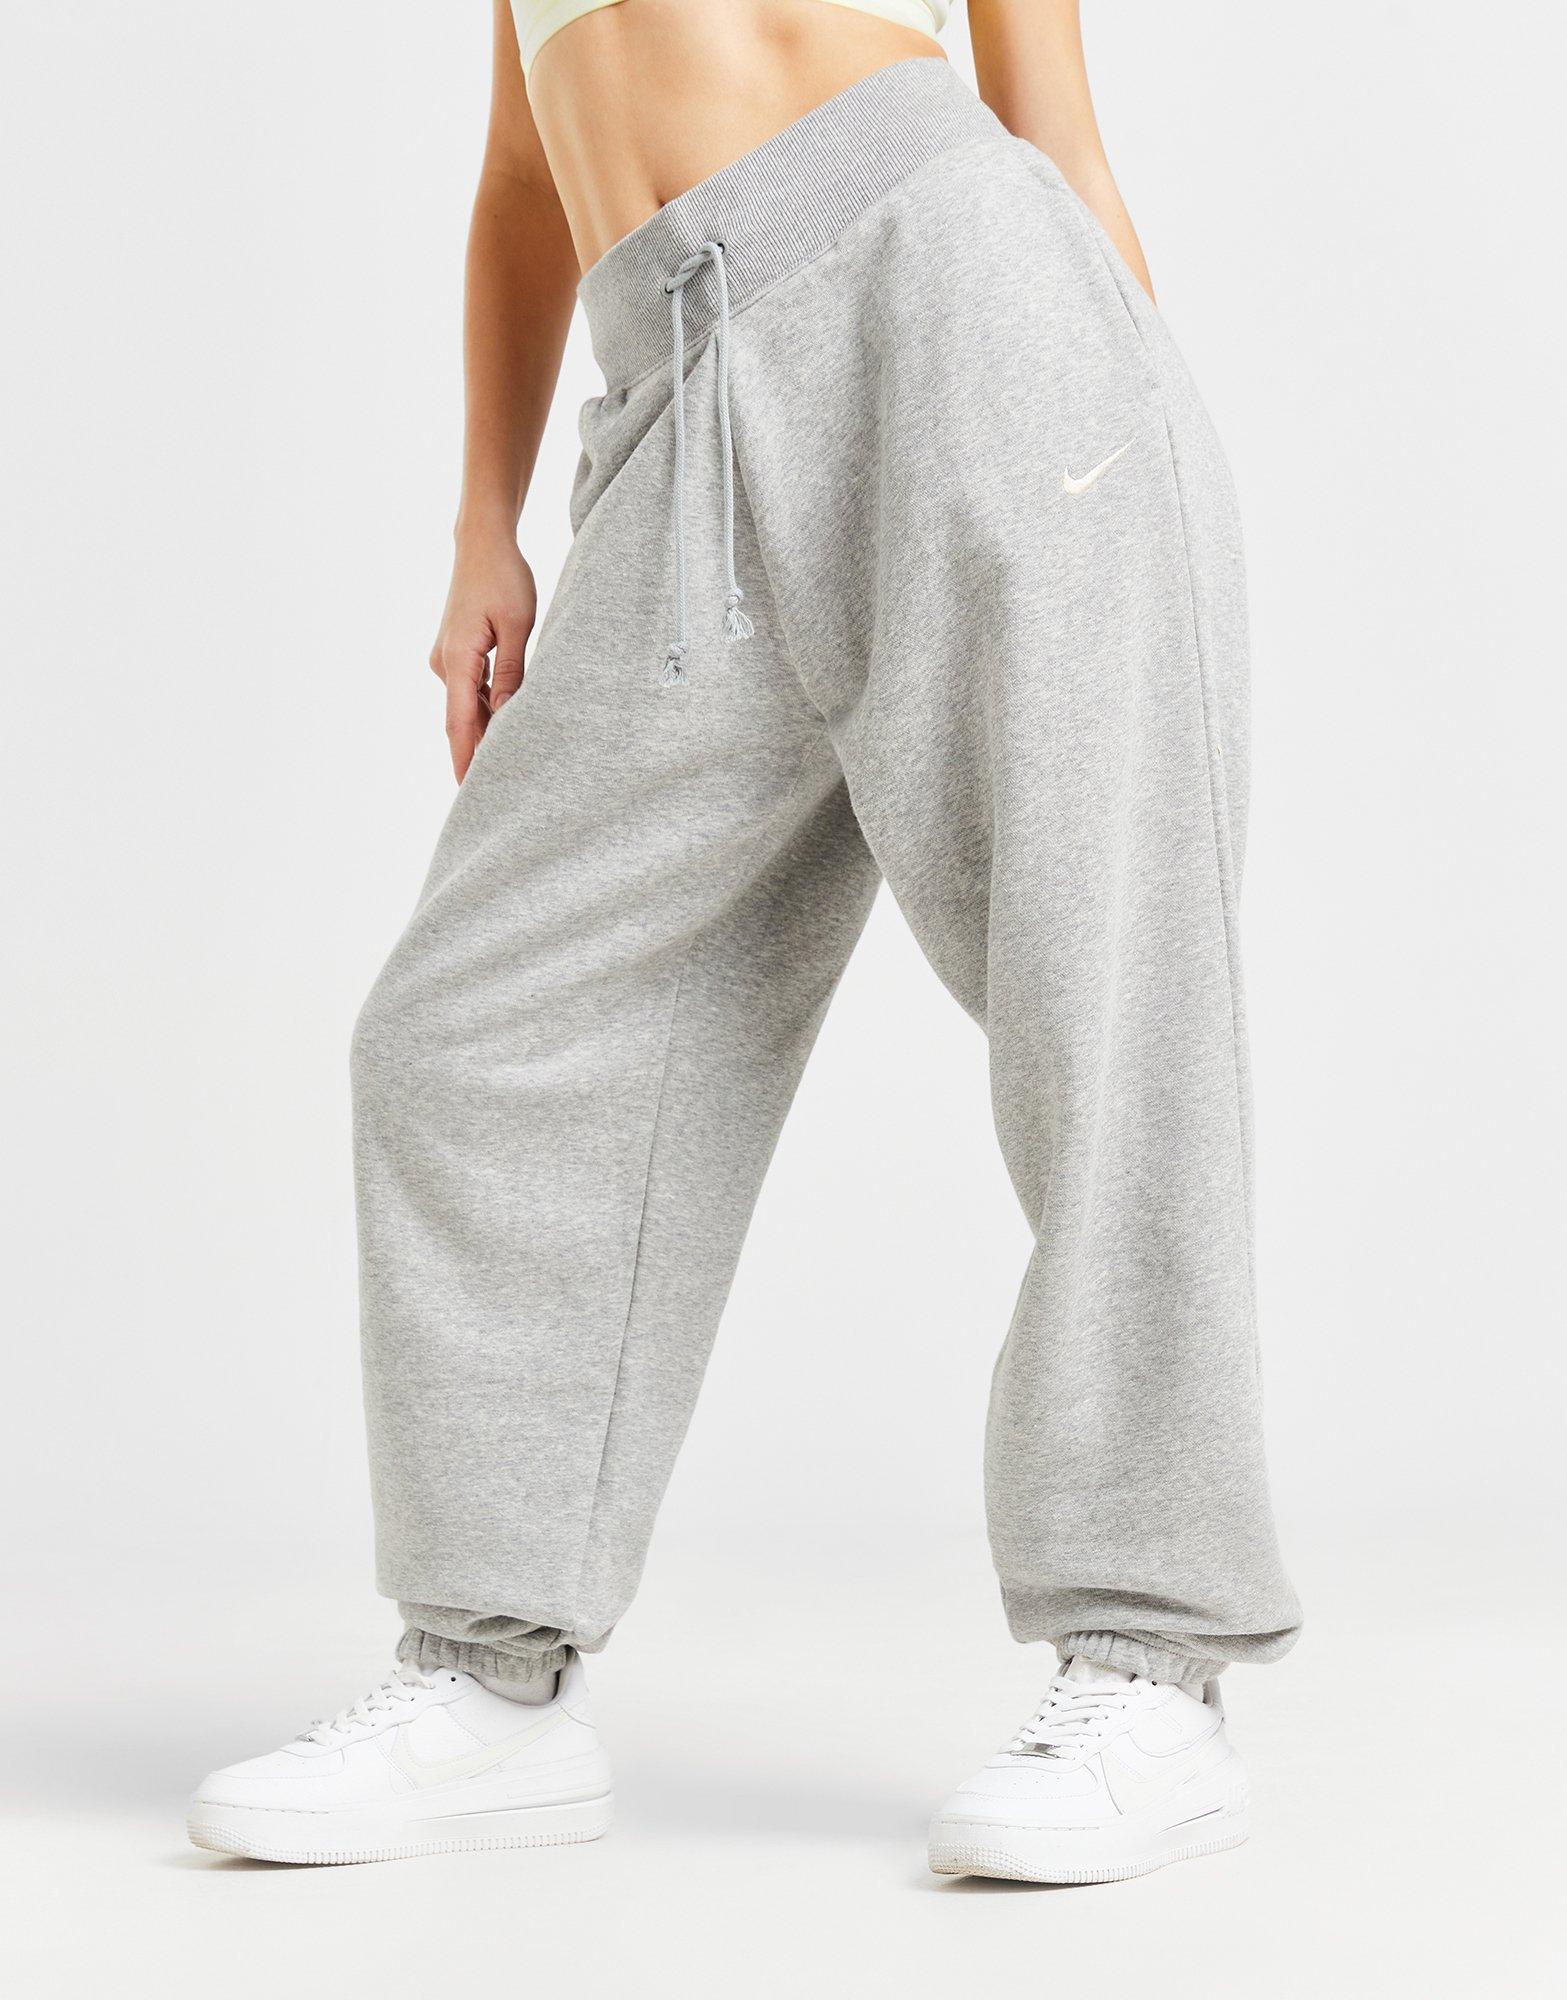 Grey women's Nike sweatpants Size Small Very small - Depop